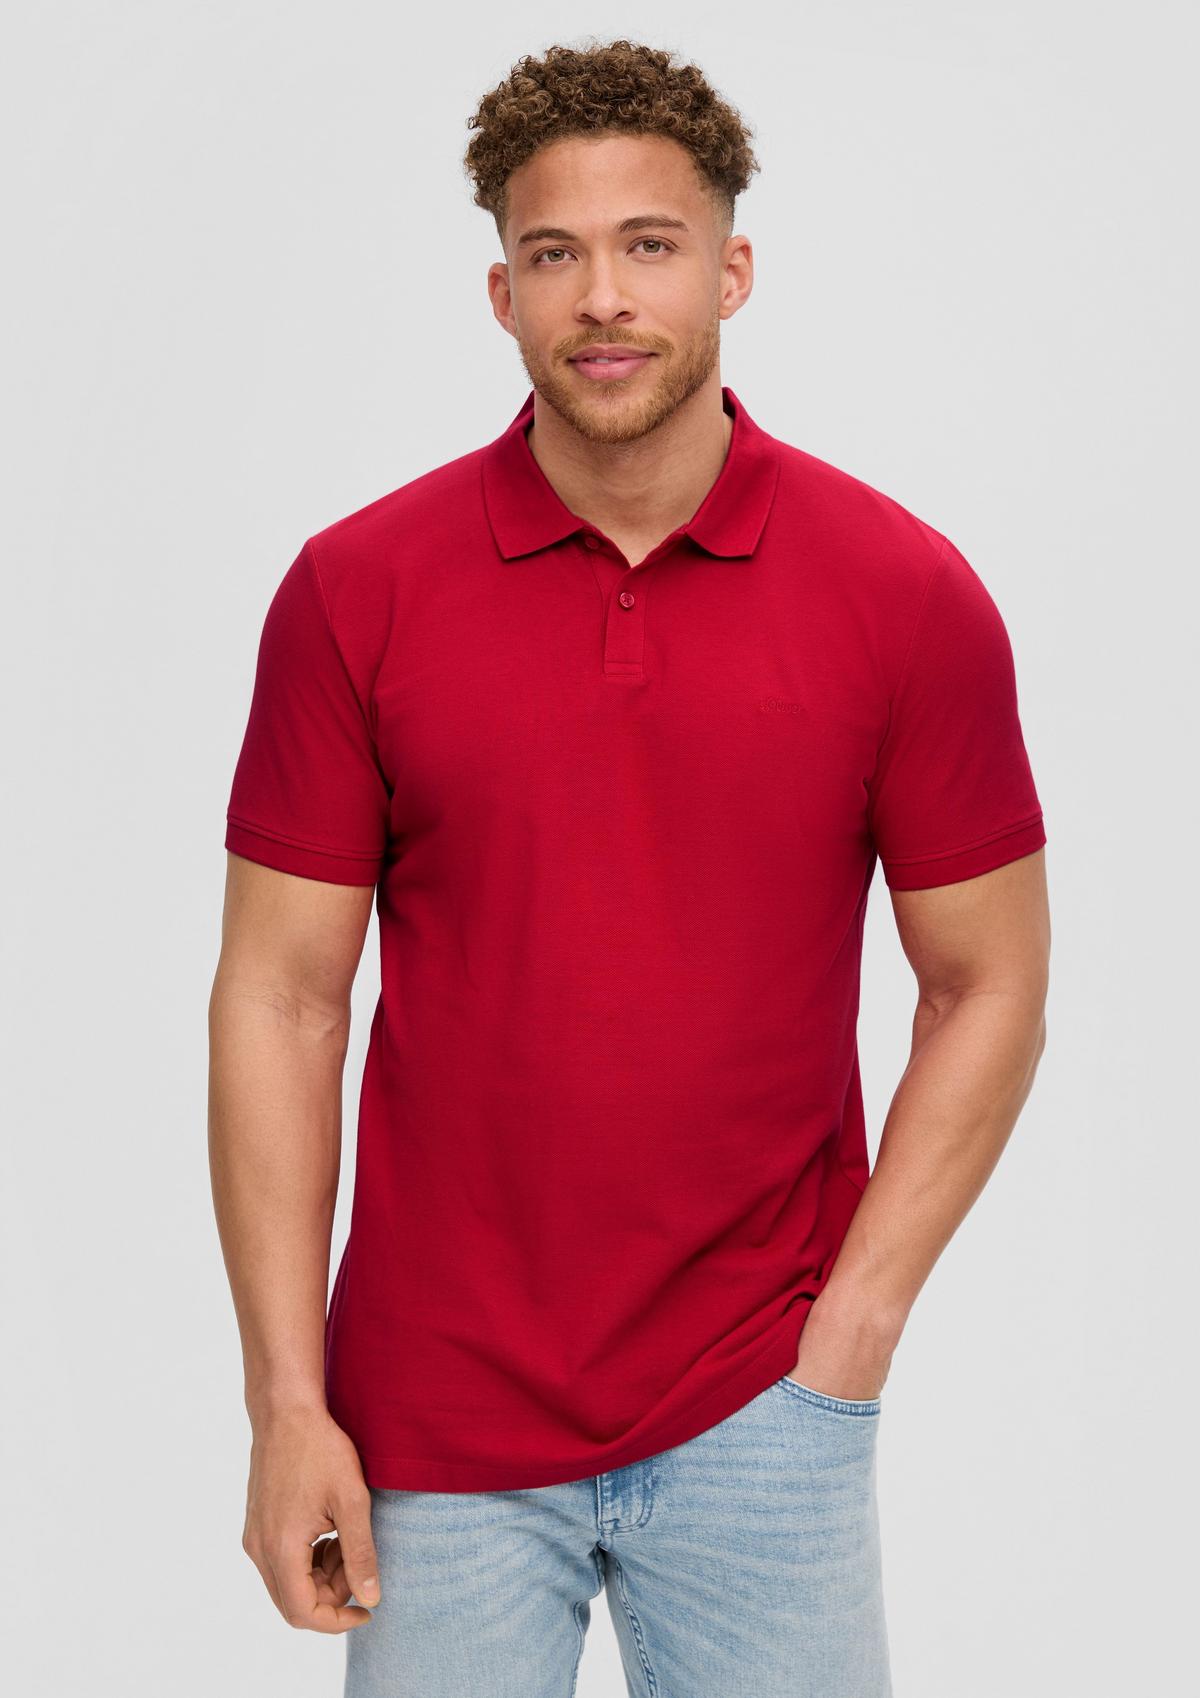 shirt navy - print minimalist Polo a with